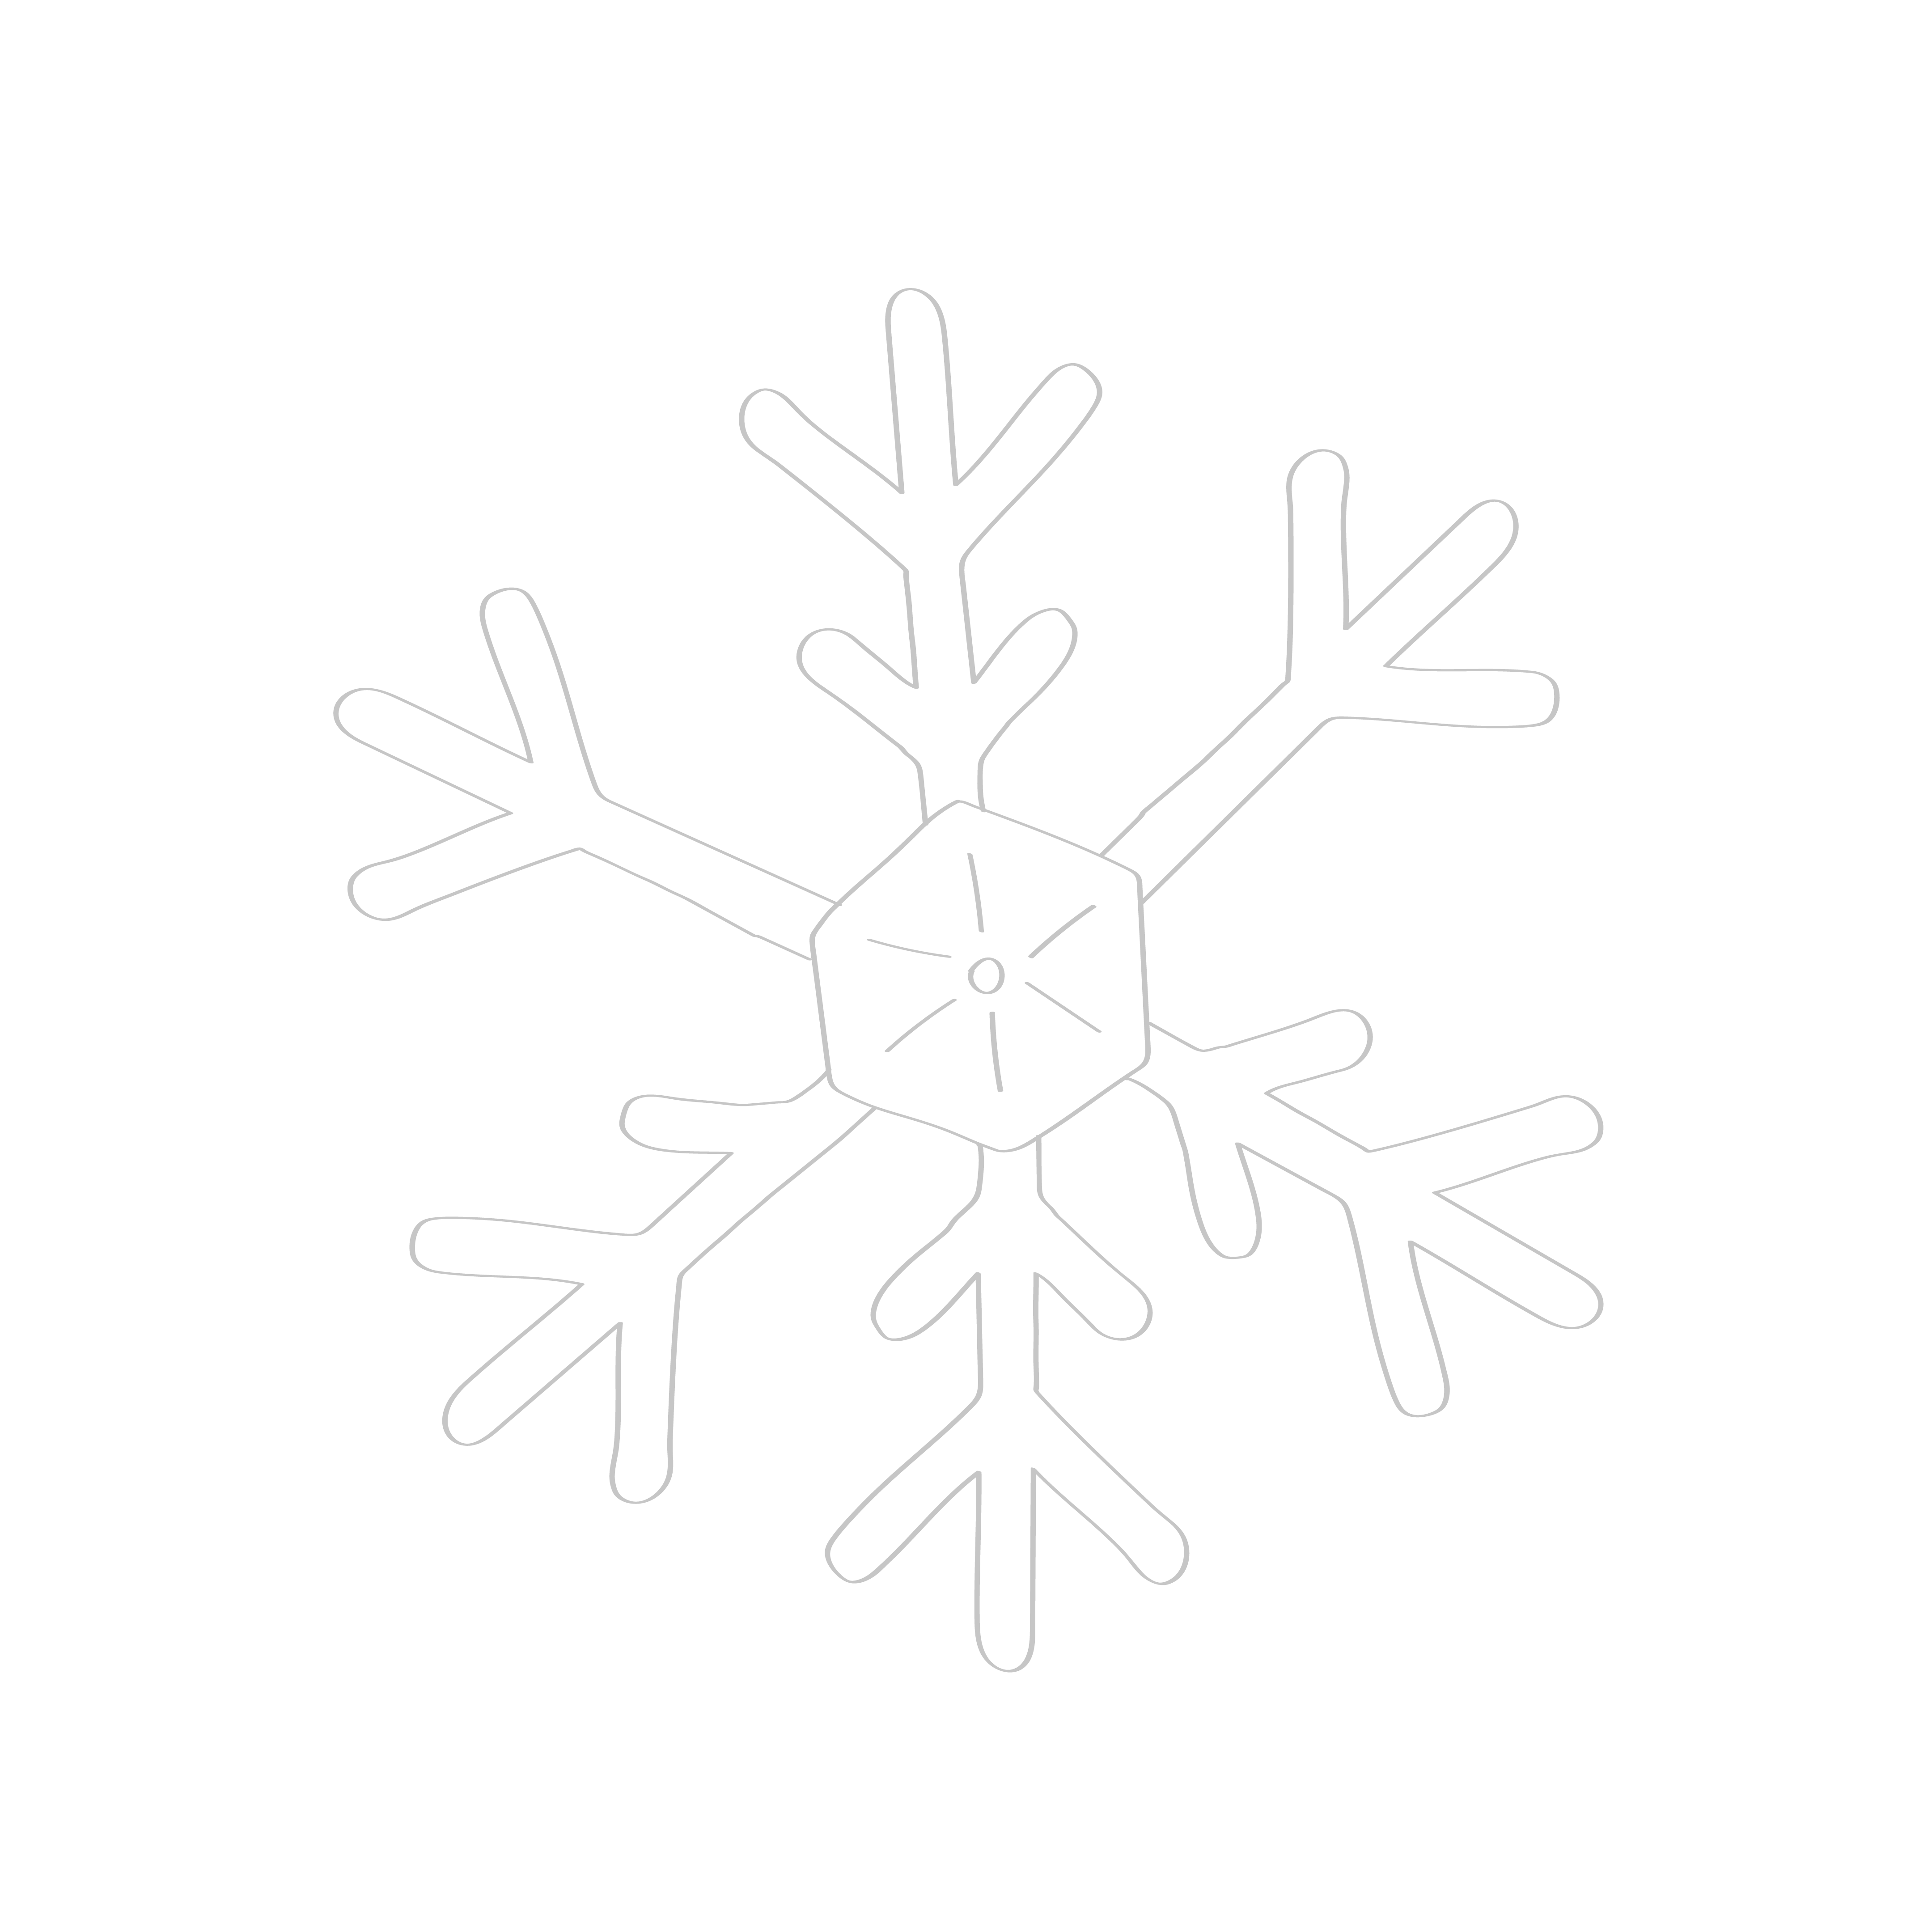 Digital illustration of snowflake in gray